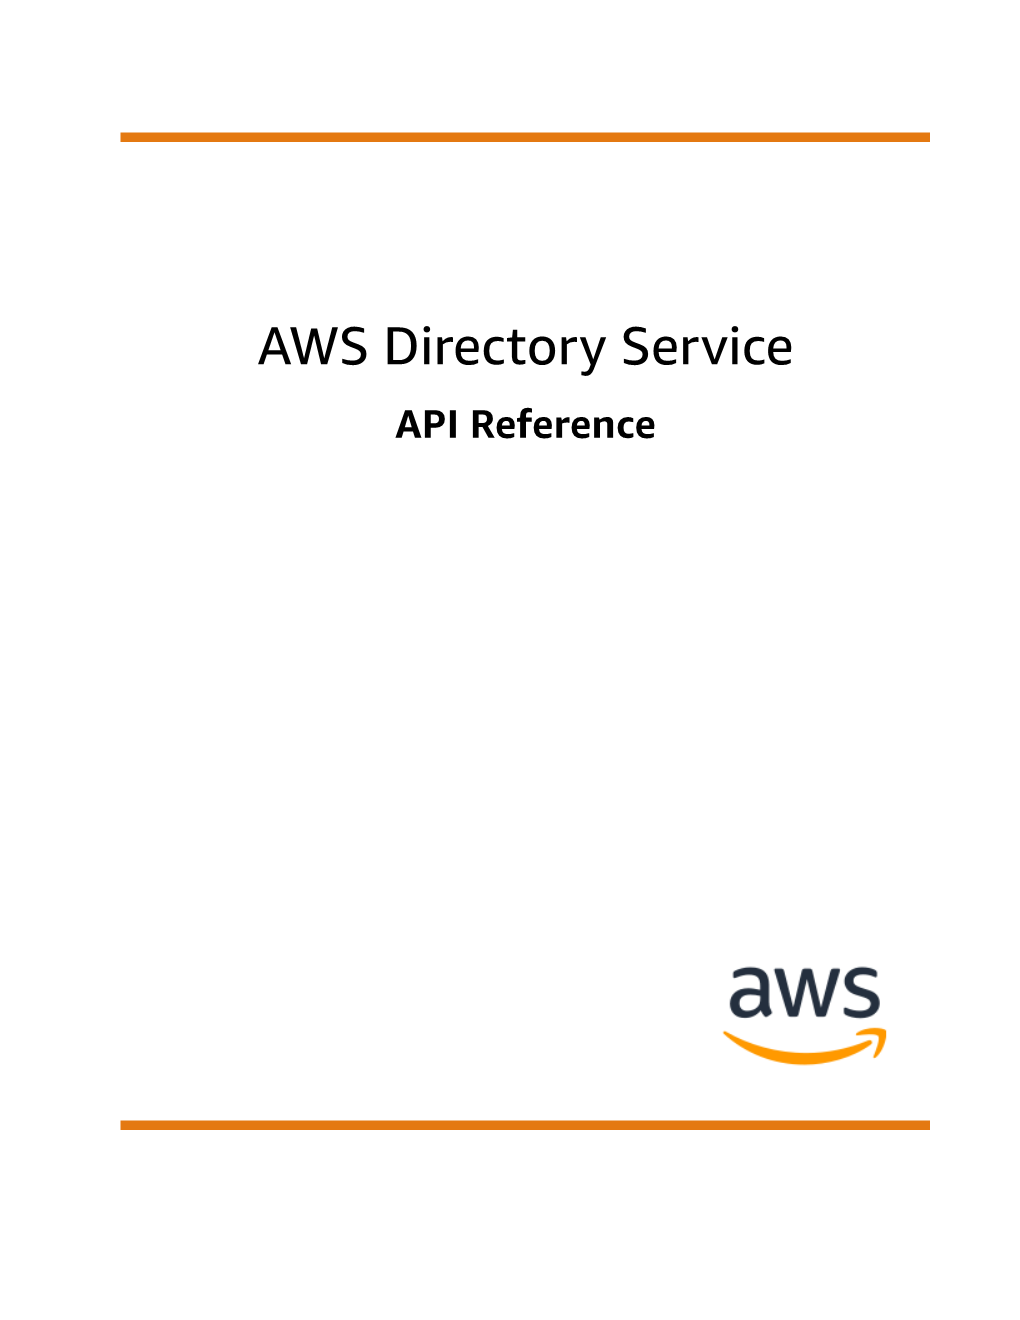 AWS Directory Service API Reference AWS Directory Service API Reference